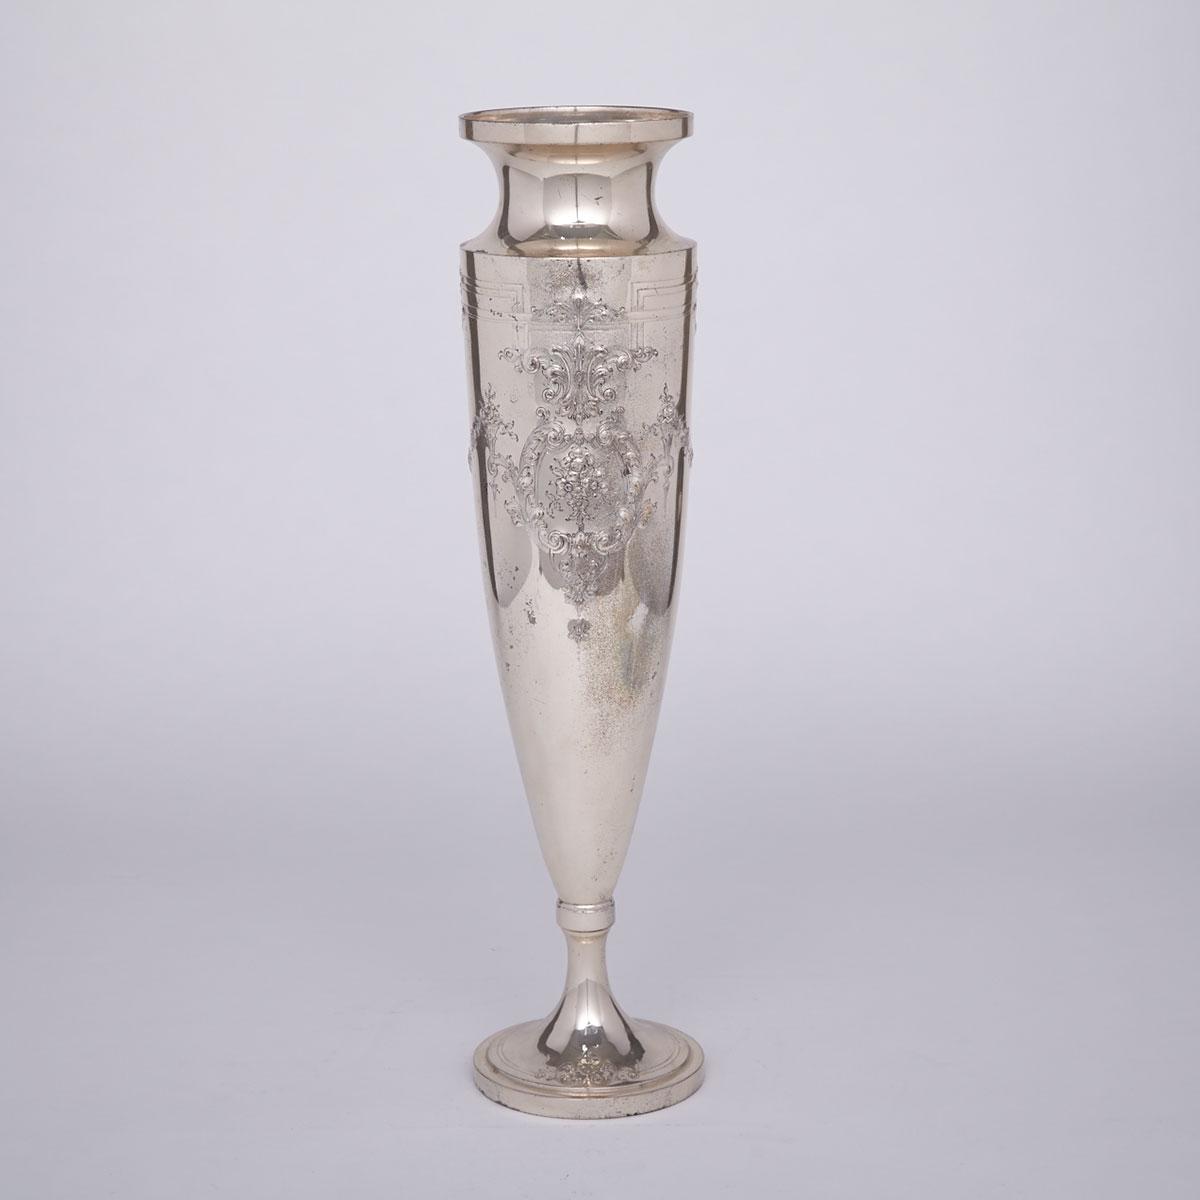 American Silver Vase, International Silver Co., Meriden, Ct., 20th century